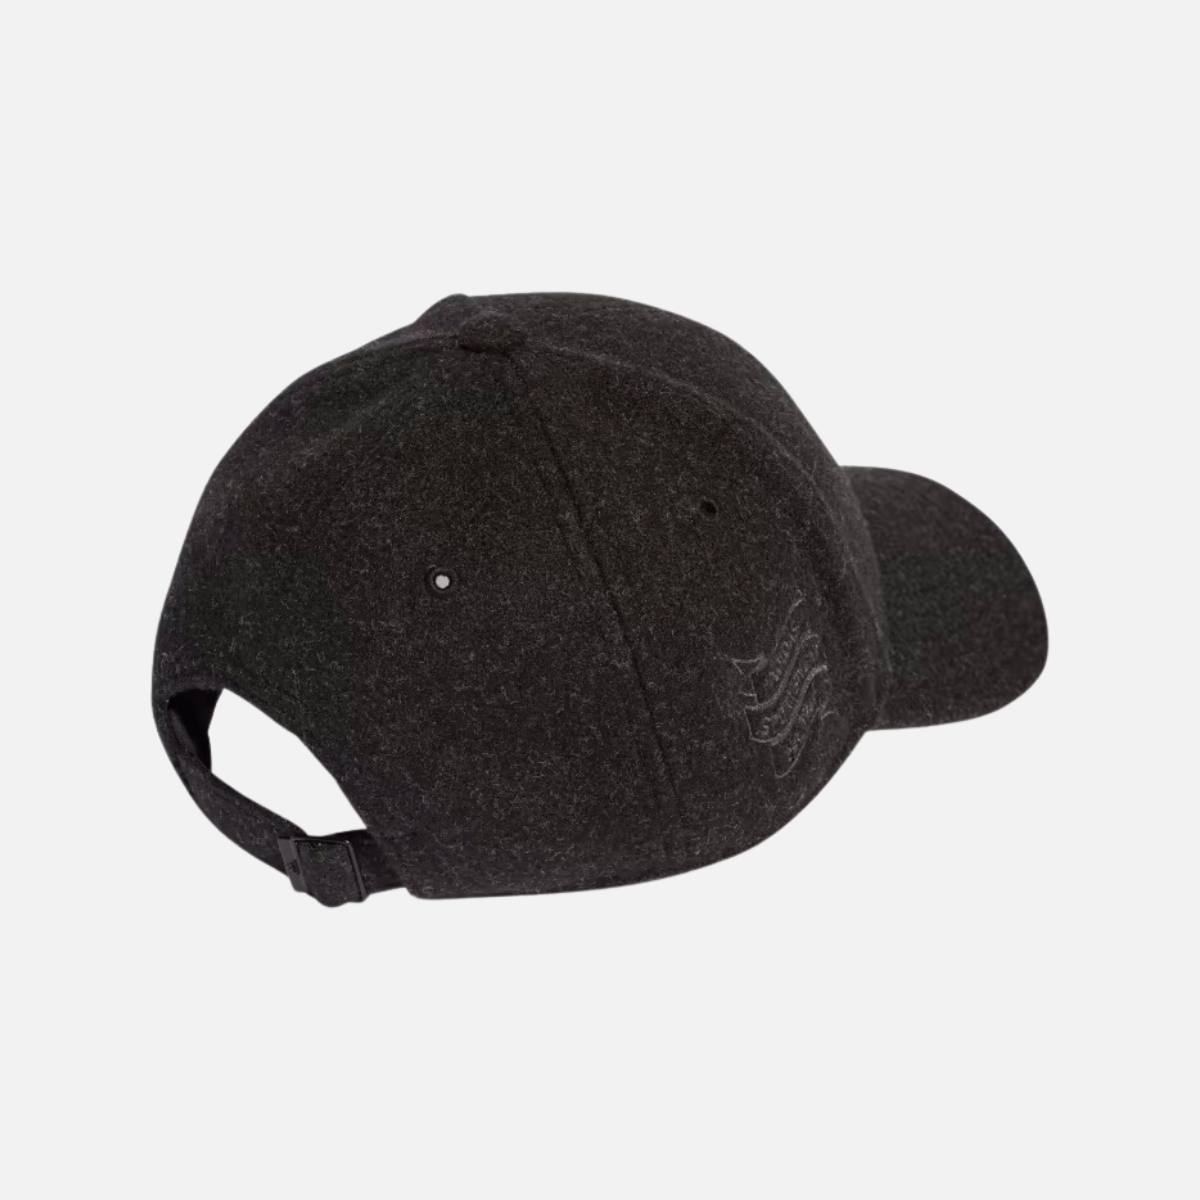 Adidas Wool Baseball Lifestyle Hat -Dark Grey Heather/Black